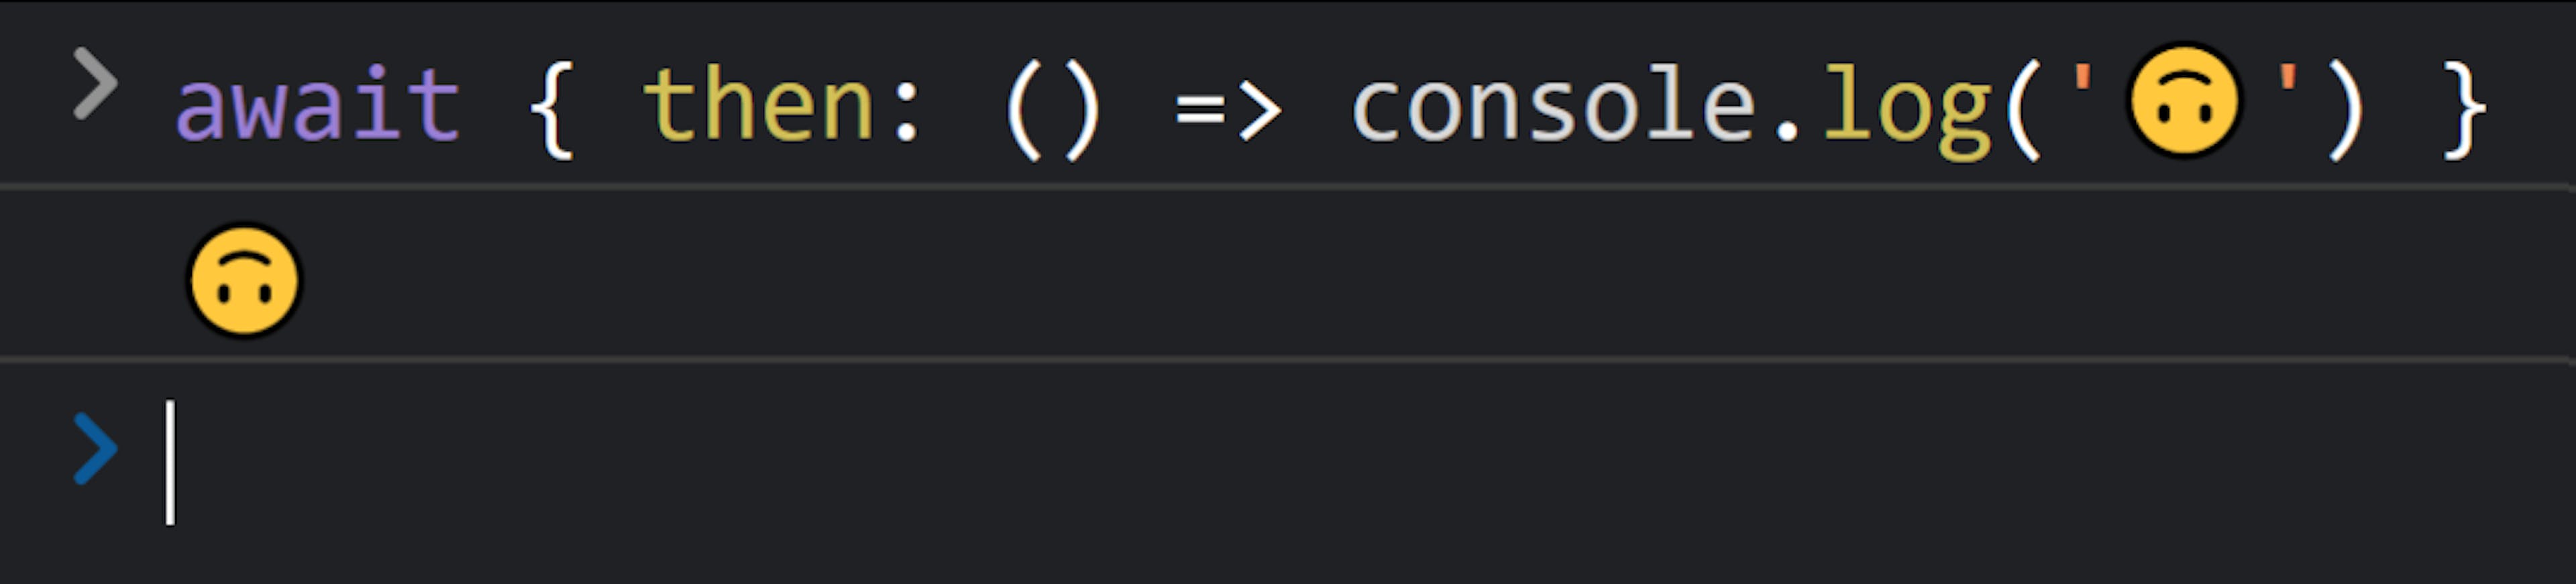 JavaScript 控制台显示文本“await { then: () => console.log('🙃') }”，后跟“🙃”。